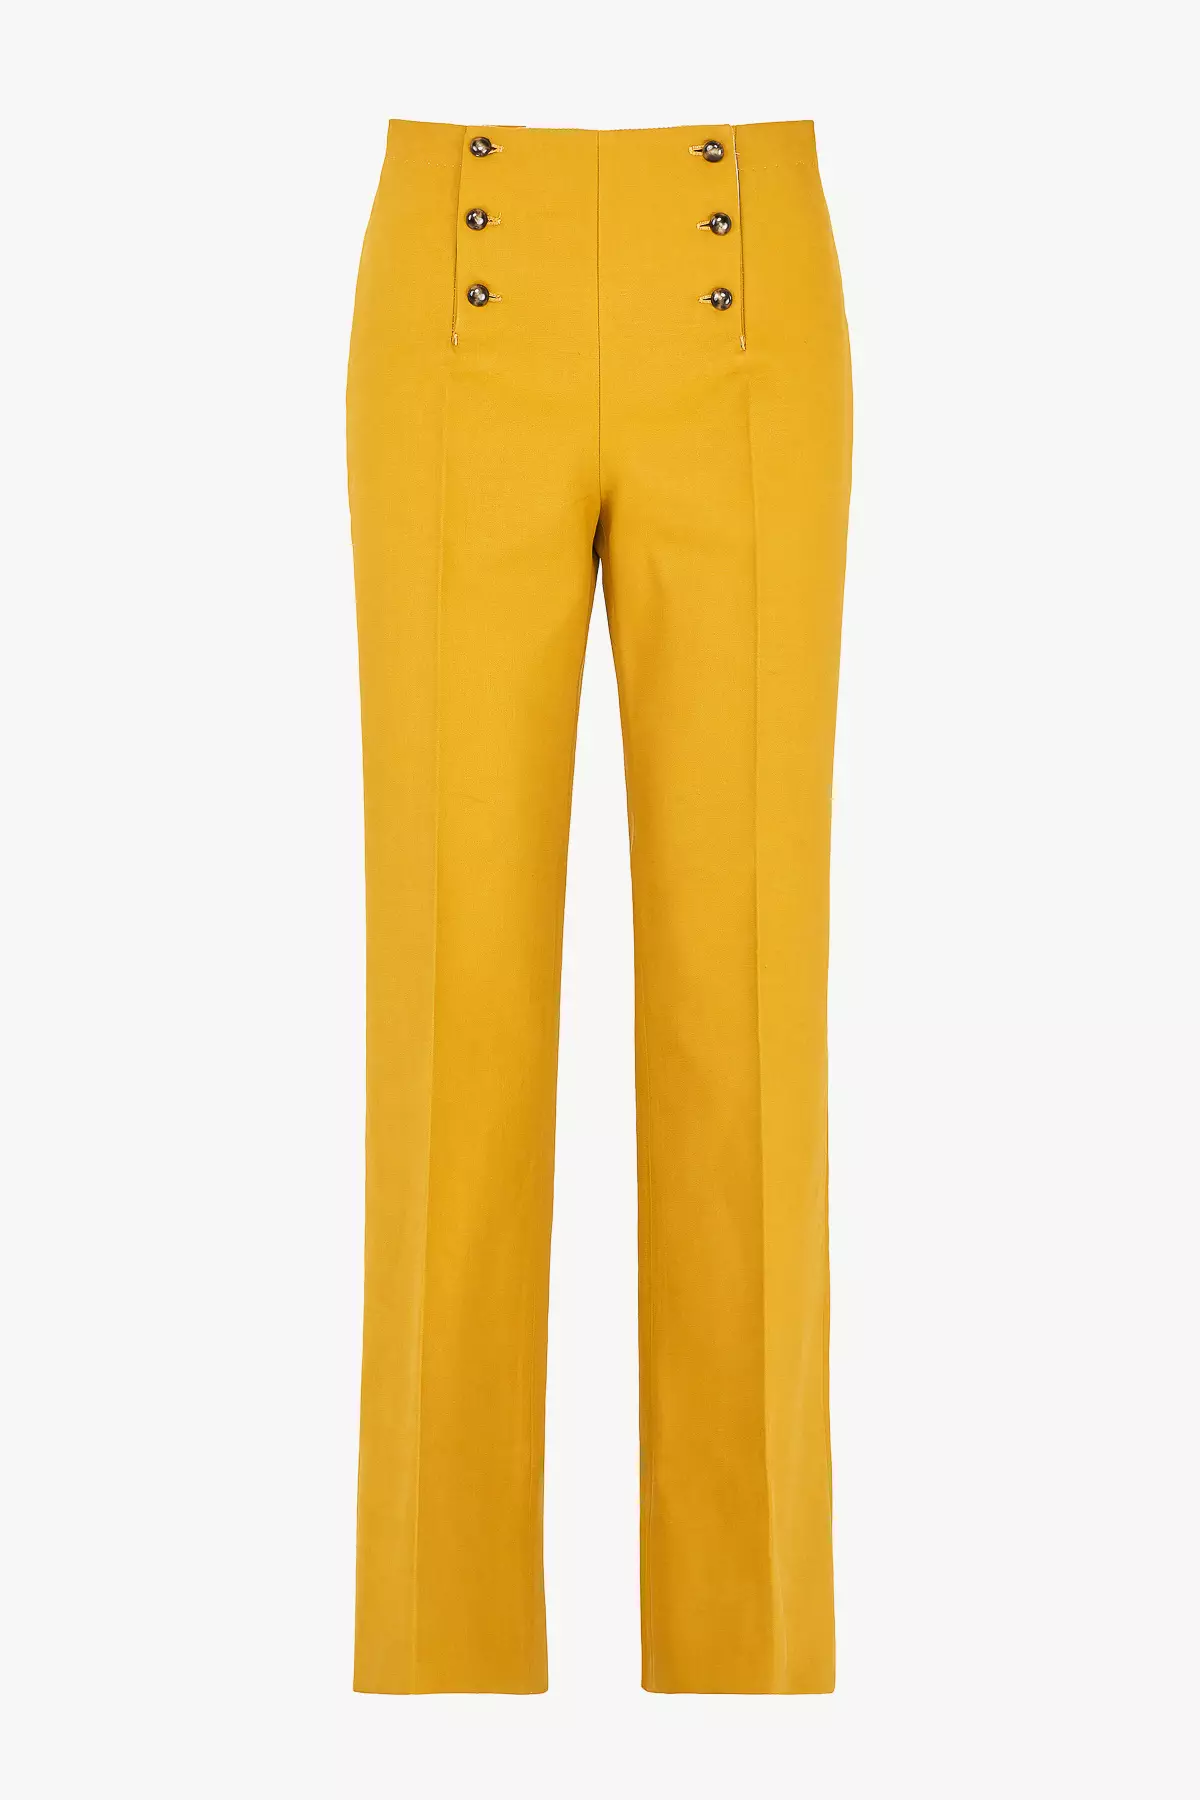 Alessio de Sole 100% Cotton Yellow Top & Trousers Set - Women